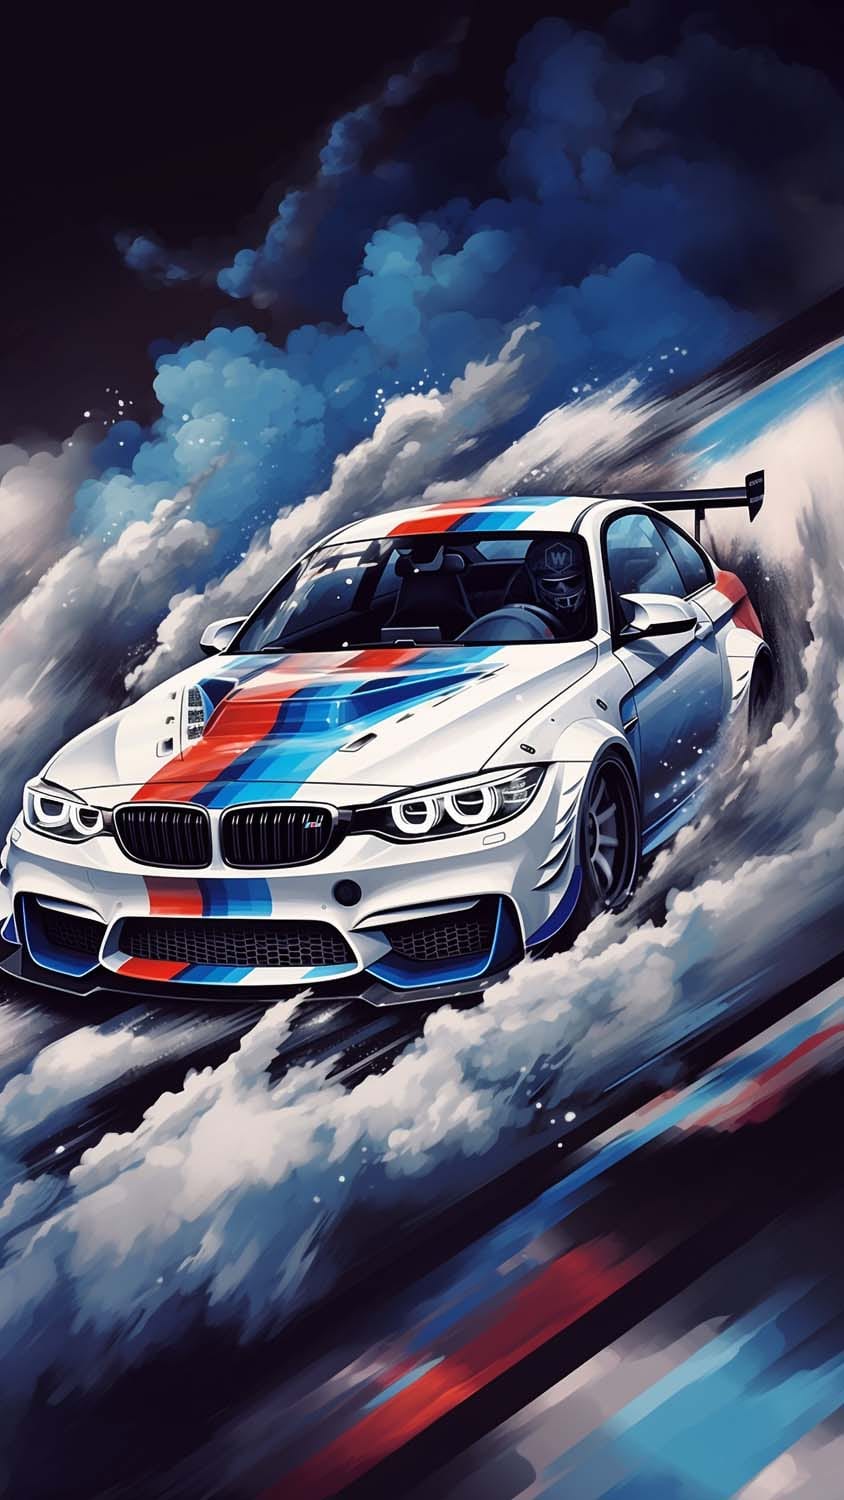 BMW Racing iPhone Wallpaper 4K